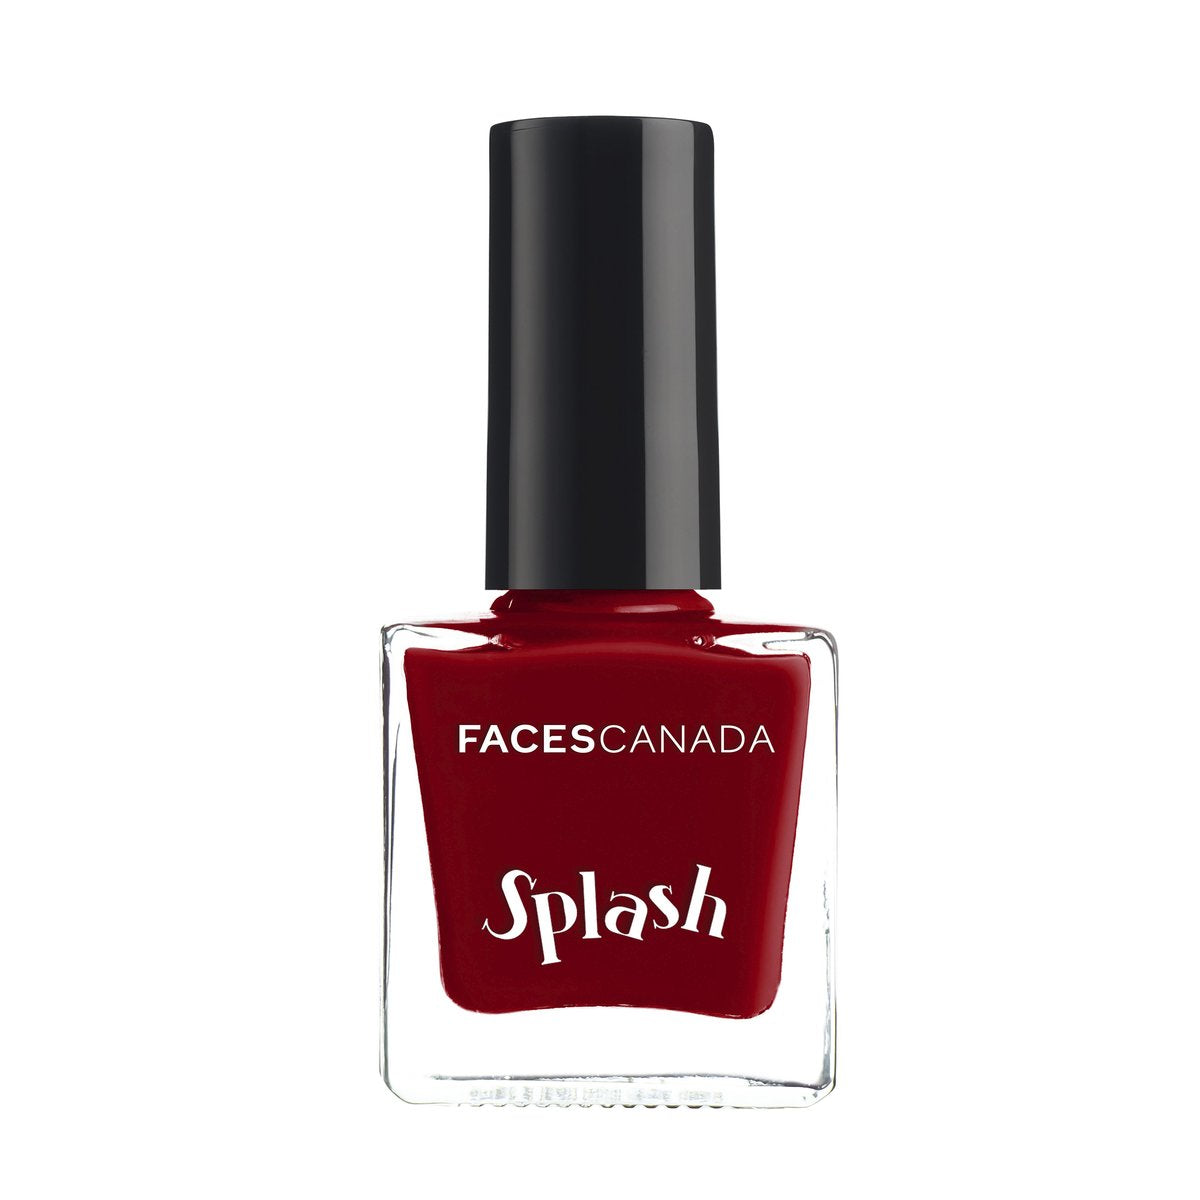 Faces Canada Ultime Pro Splash Nail Enamel 5ml | eBay